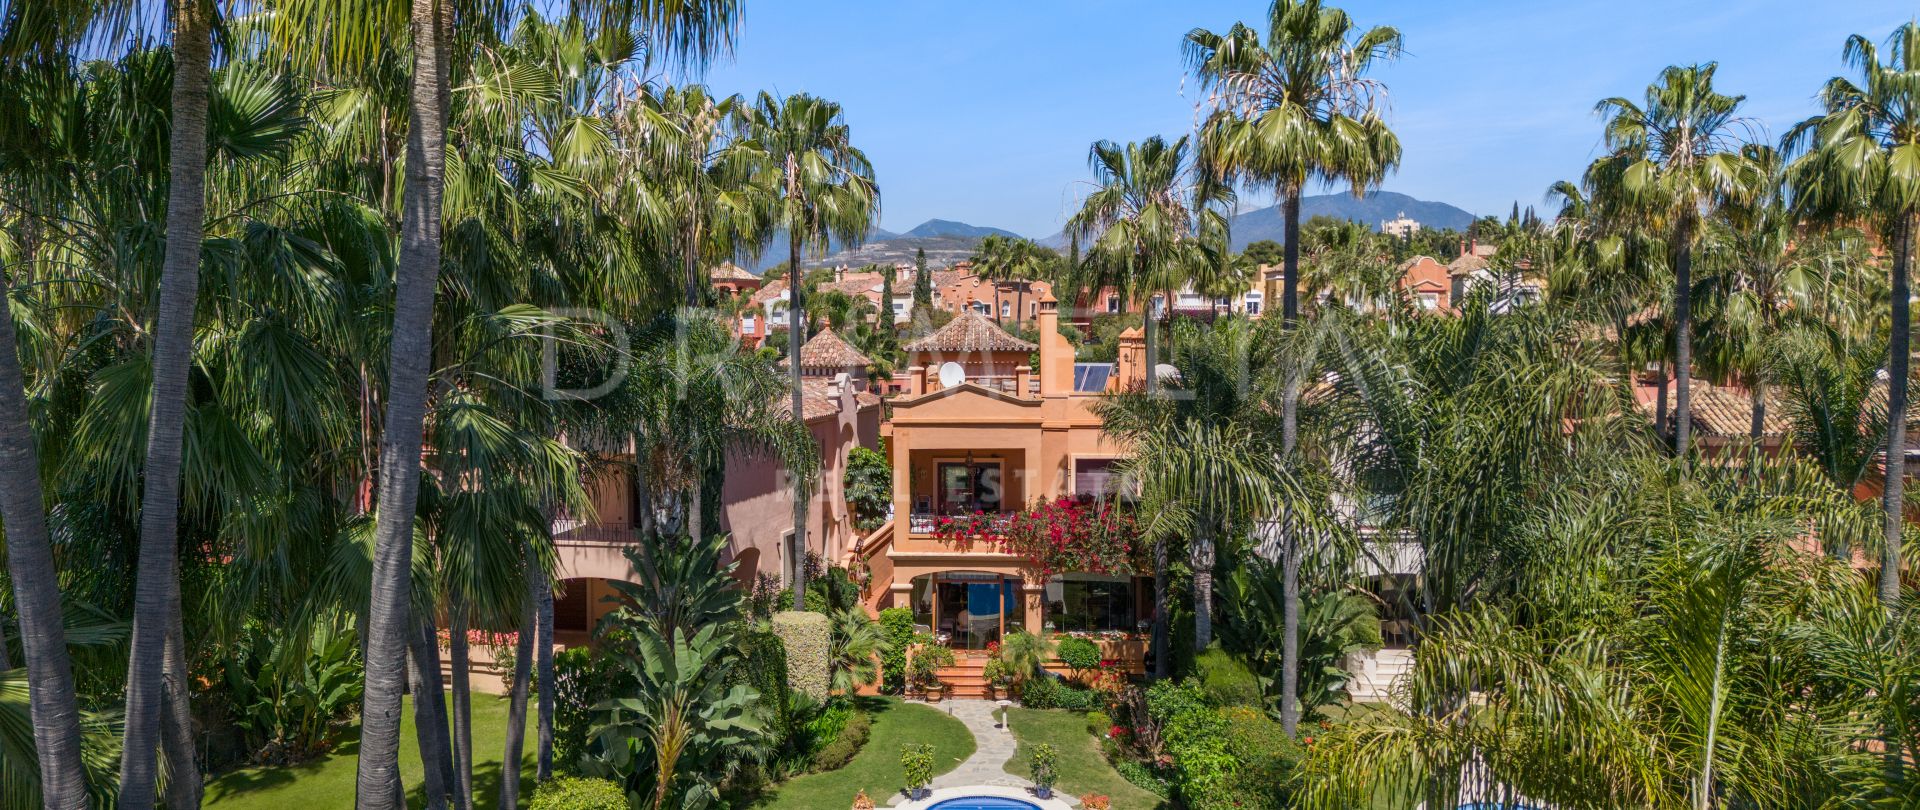 Gemütliche klassische mediterrane Familienvilla in La Alzambra, Nueva Andalucia, Spanien